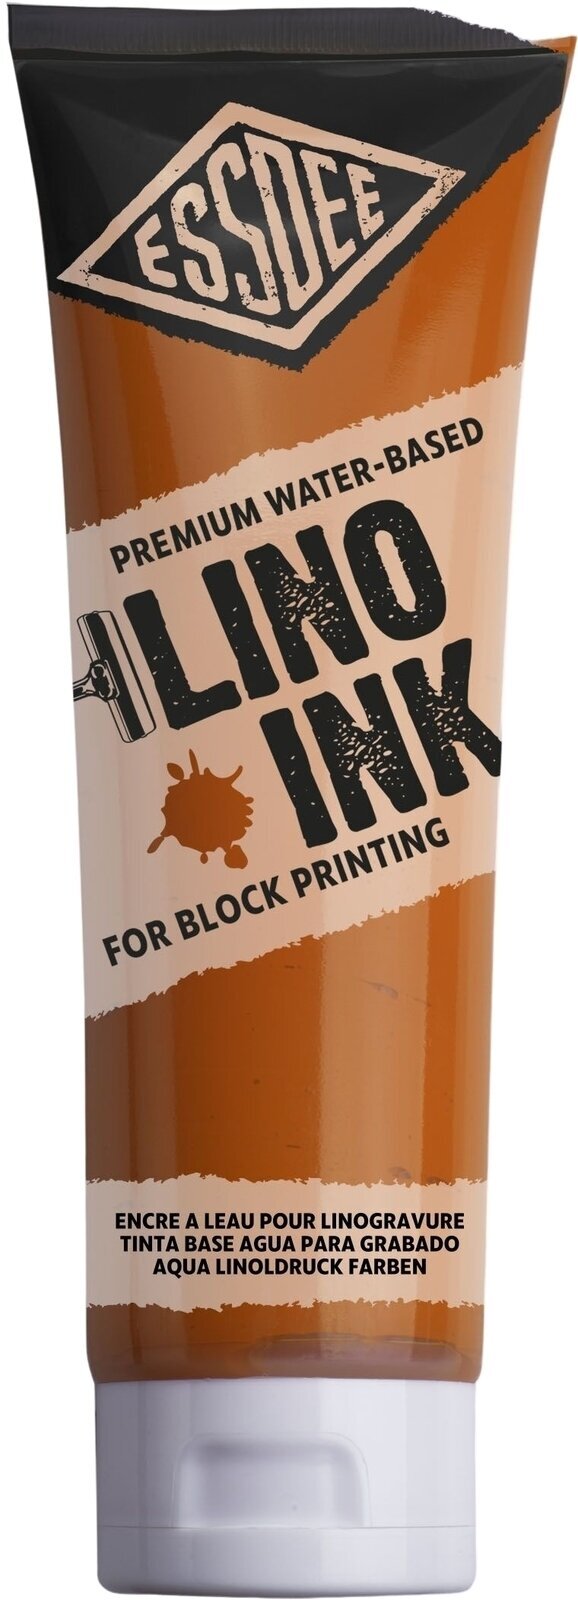 Pintura para linograbado Essdee Block Printing Ink Pintura para linograbado Naranja 300 ml